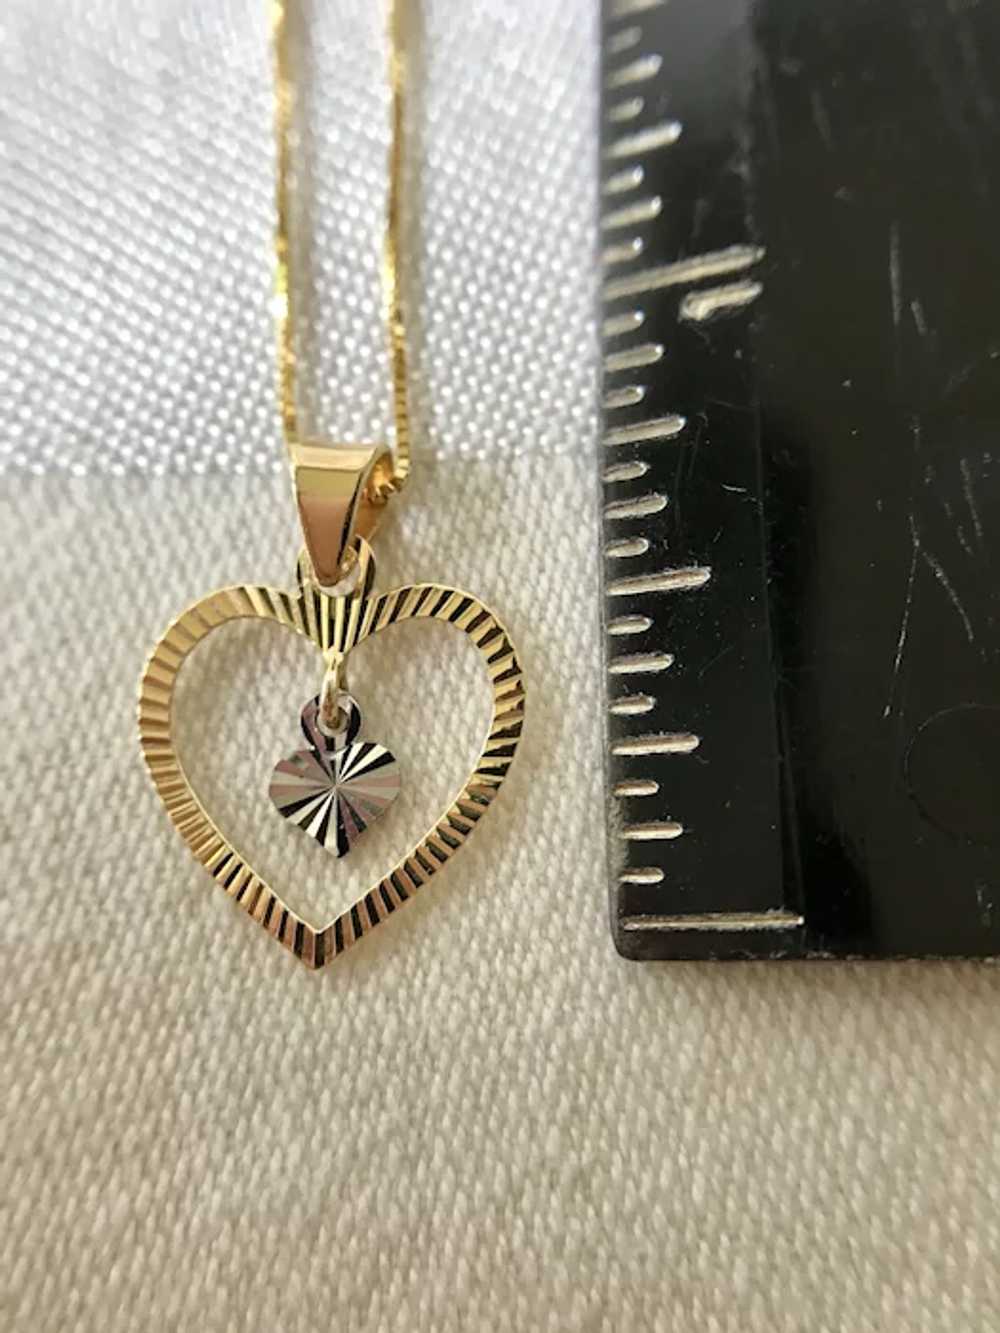 Etched 14K Gold Heart Pendant Necklace - image 7